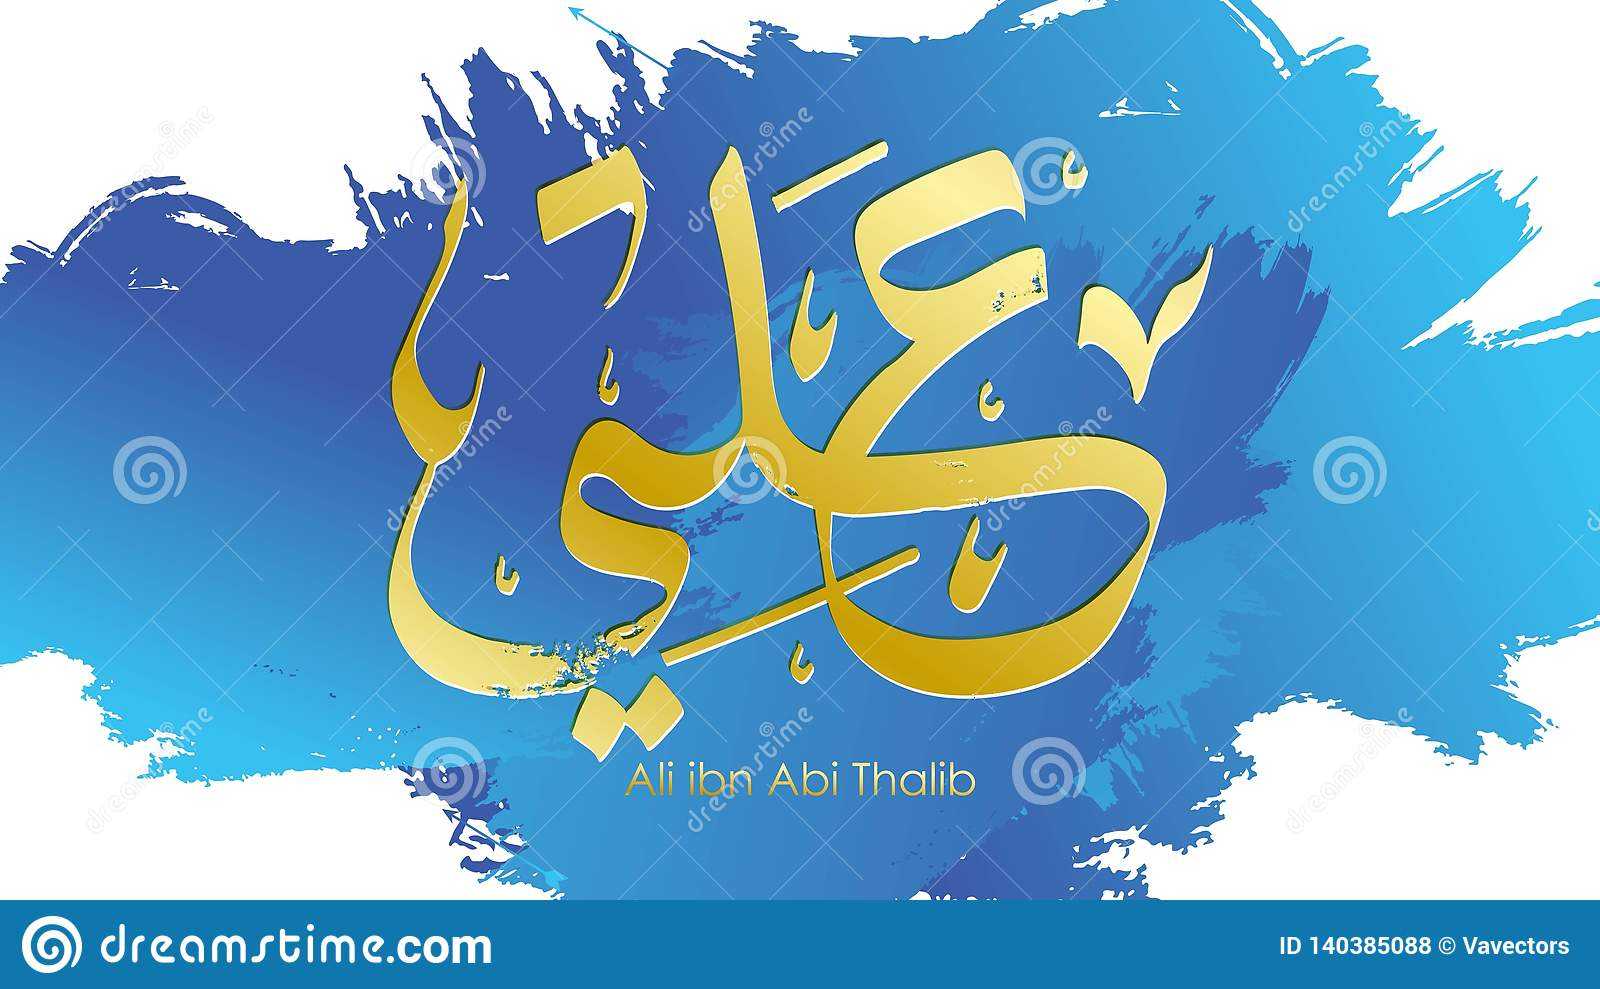 Arabic Hazrat Ali Bin Abi Thalib Greeting Card Template Within Bin Card Template